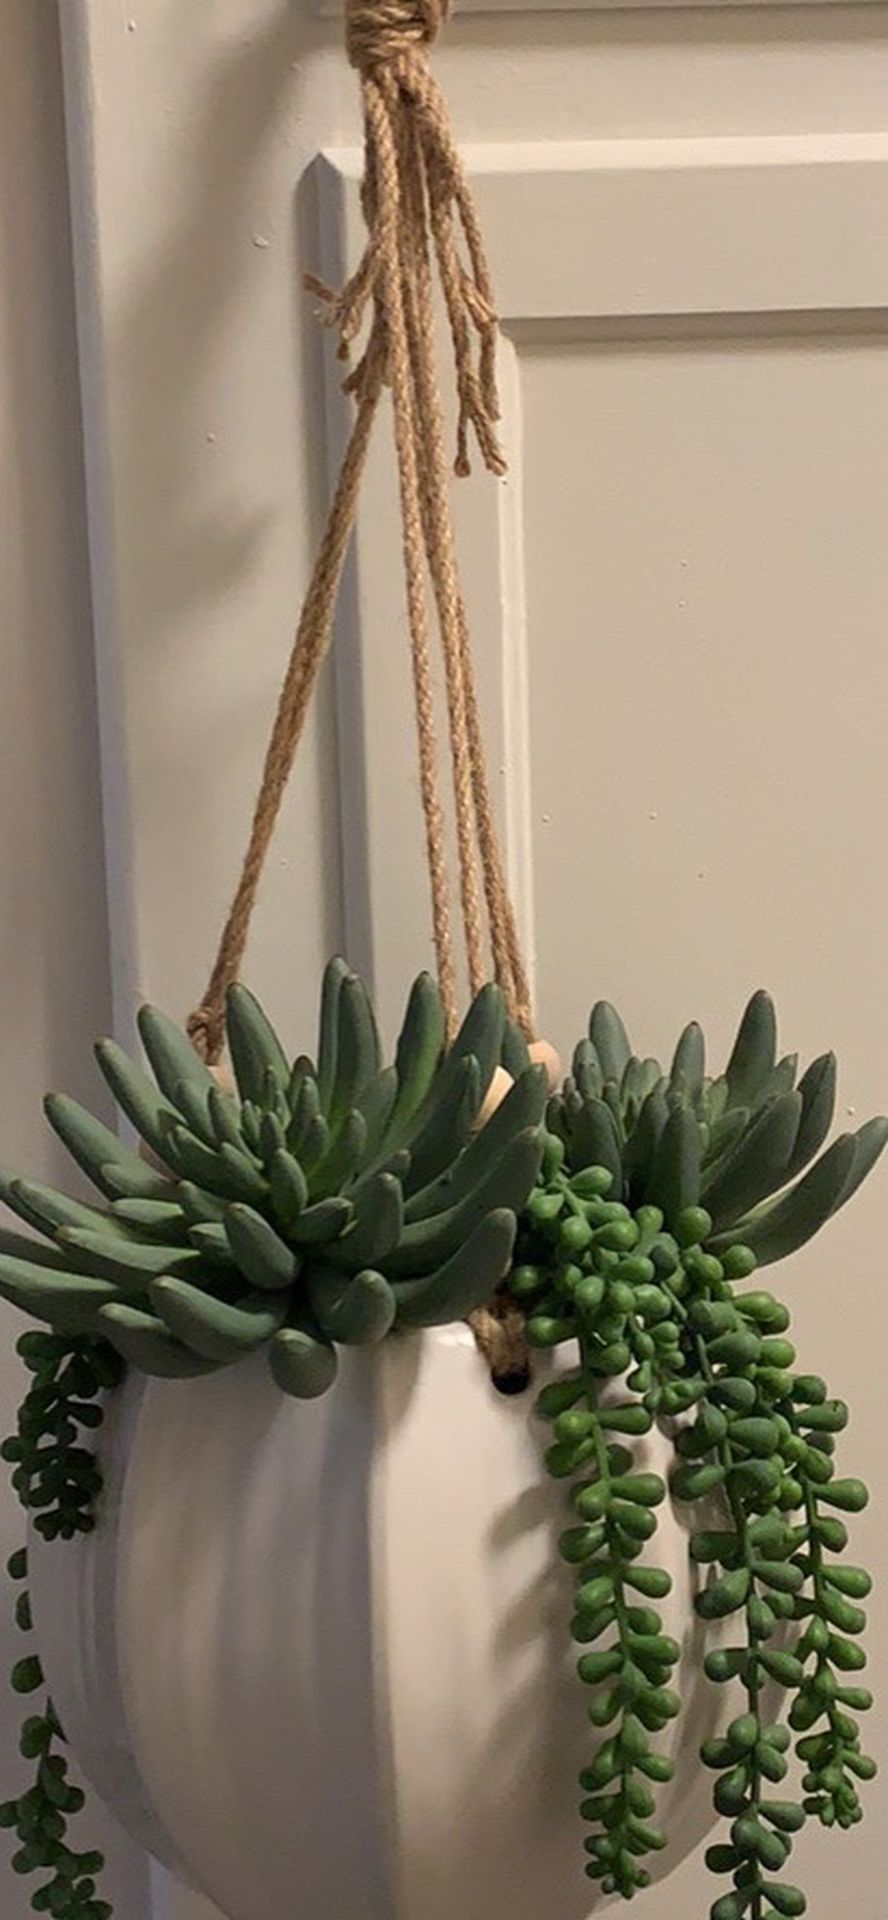 Ceramic Hanging Pot With Succulents